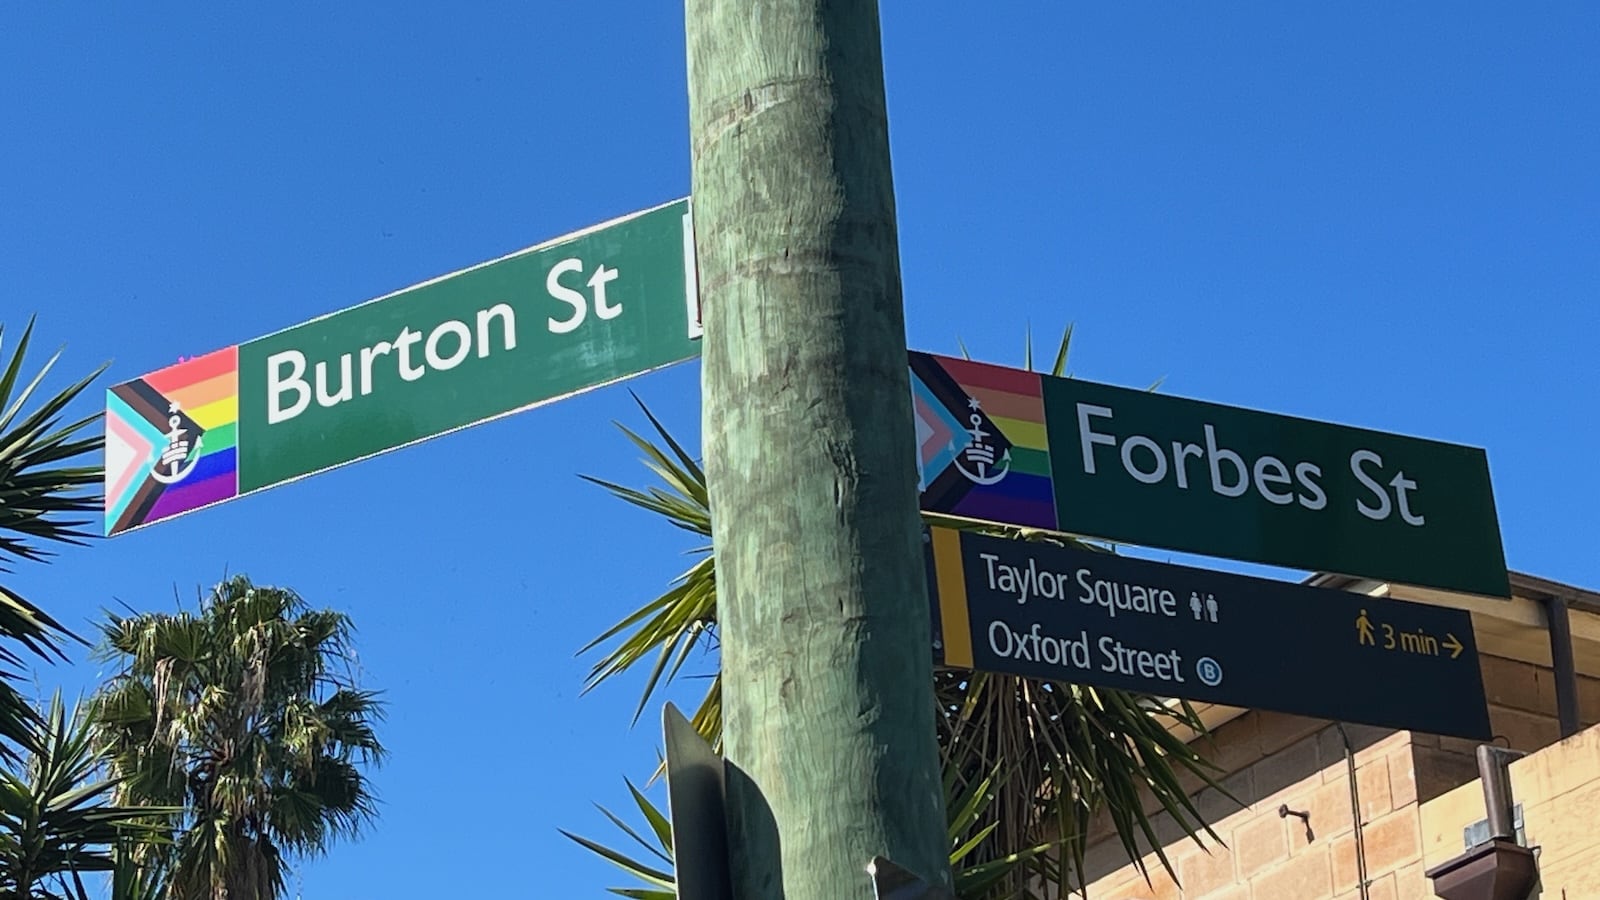 Darlinghurst gay neighborhood road signs with rainbows.